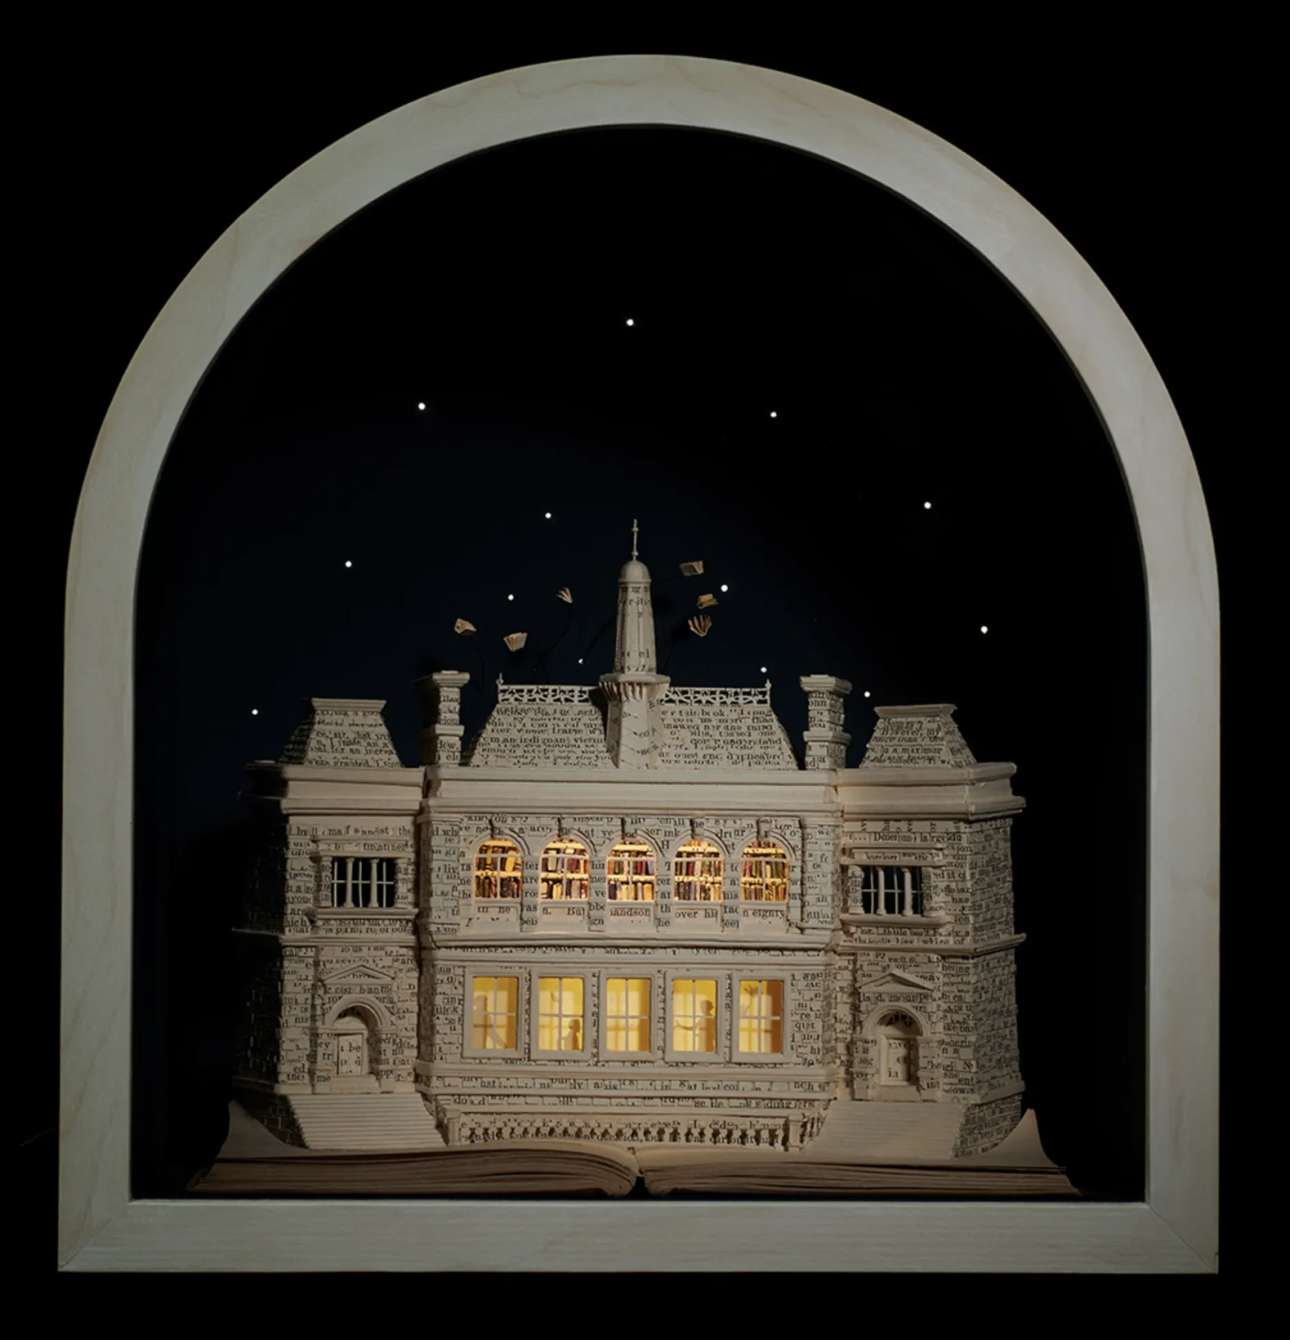 H Κεντρική Βιβλιοθήκη του Αμπερντίν, 2018, παραγγελία ενός συνταξιούχου βιβλιοθηκάριου ο οποίος εργαζόταν στη βιβλιοθήκη του Αμπερντίν για περισσότερα από 30 χρόνια. Οι σιλουέτες των φαντασμάτων που στοιχειώνουν τη βιβλιοθήκη διακρίνονται από τα παράθυρα του χάρτινου κτιρίου